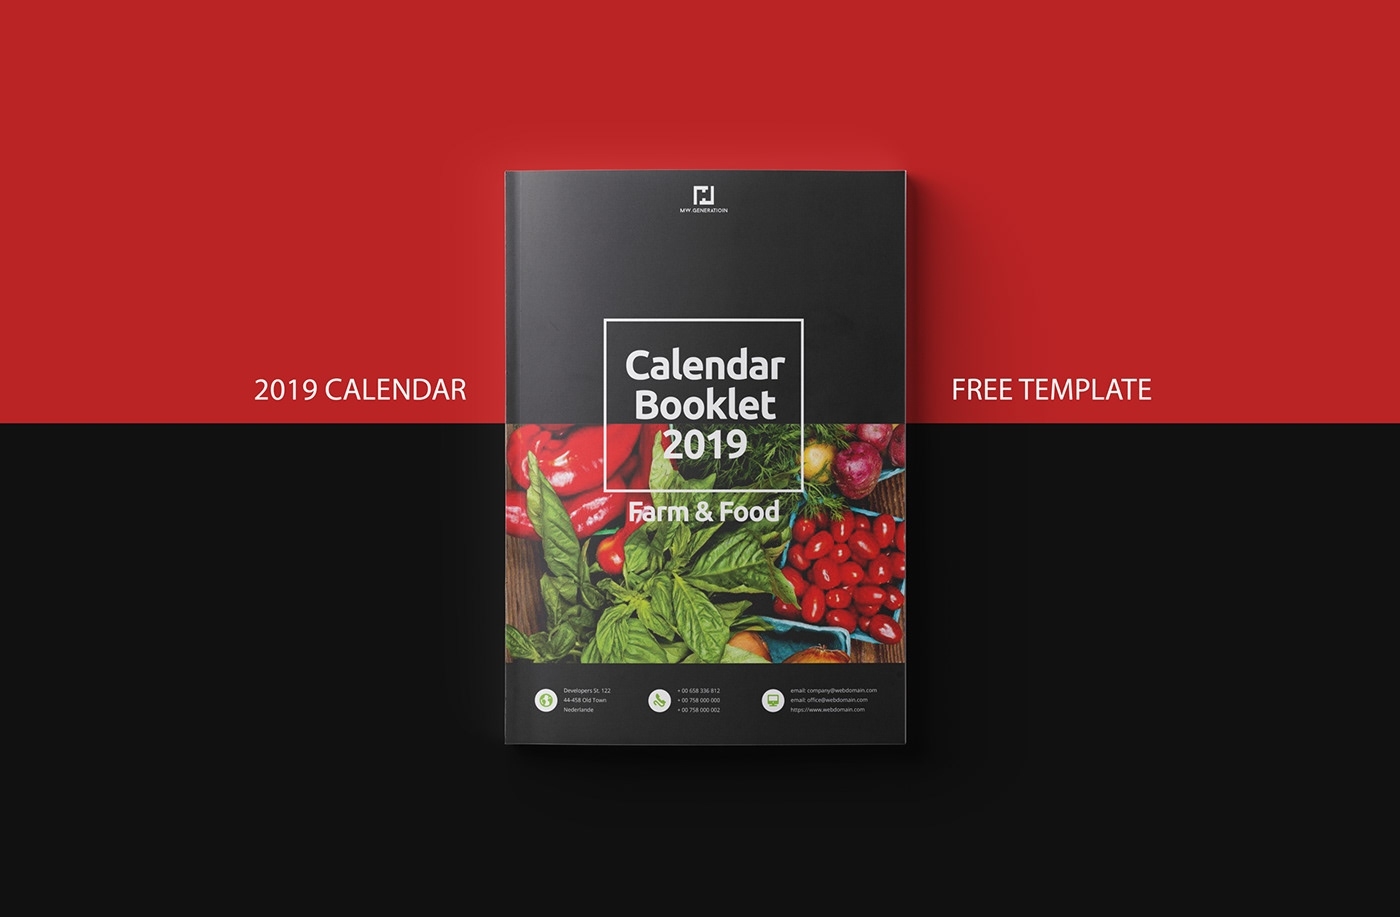 Free Calendar 2019 Indesign Template On Behance Calendar Template Indesign Free